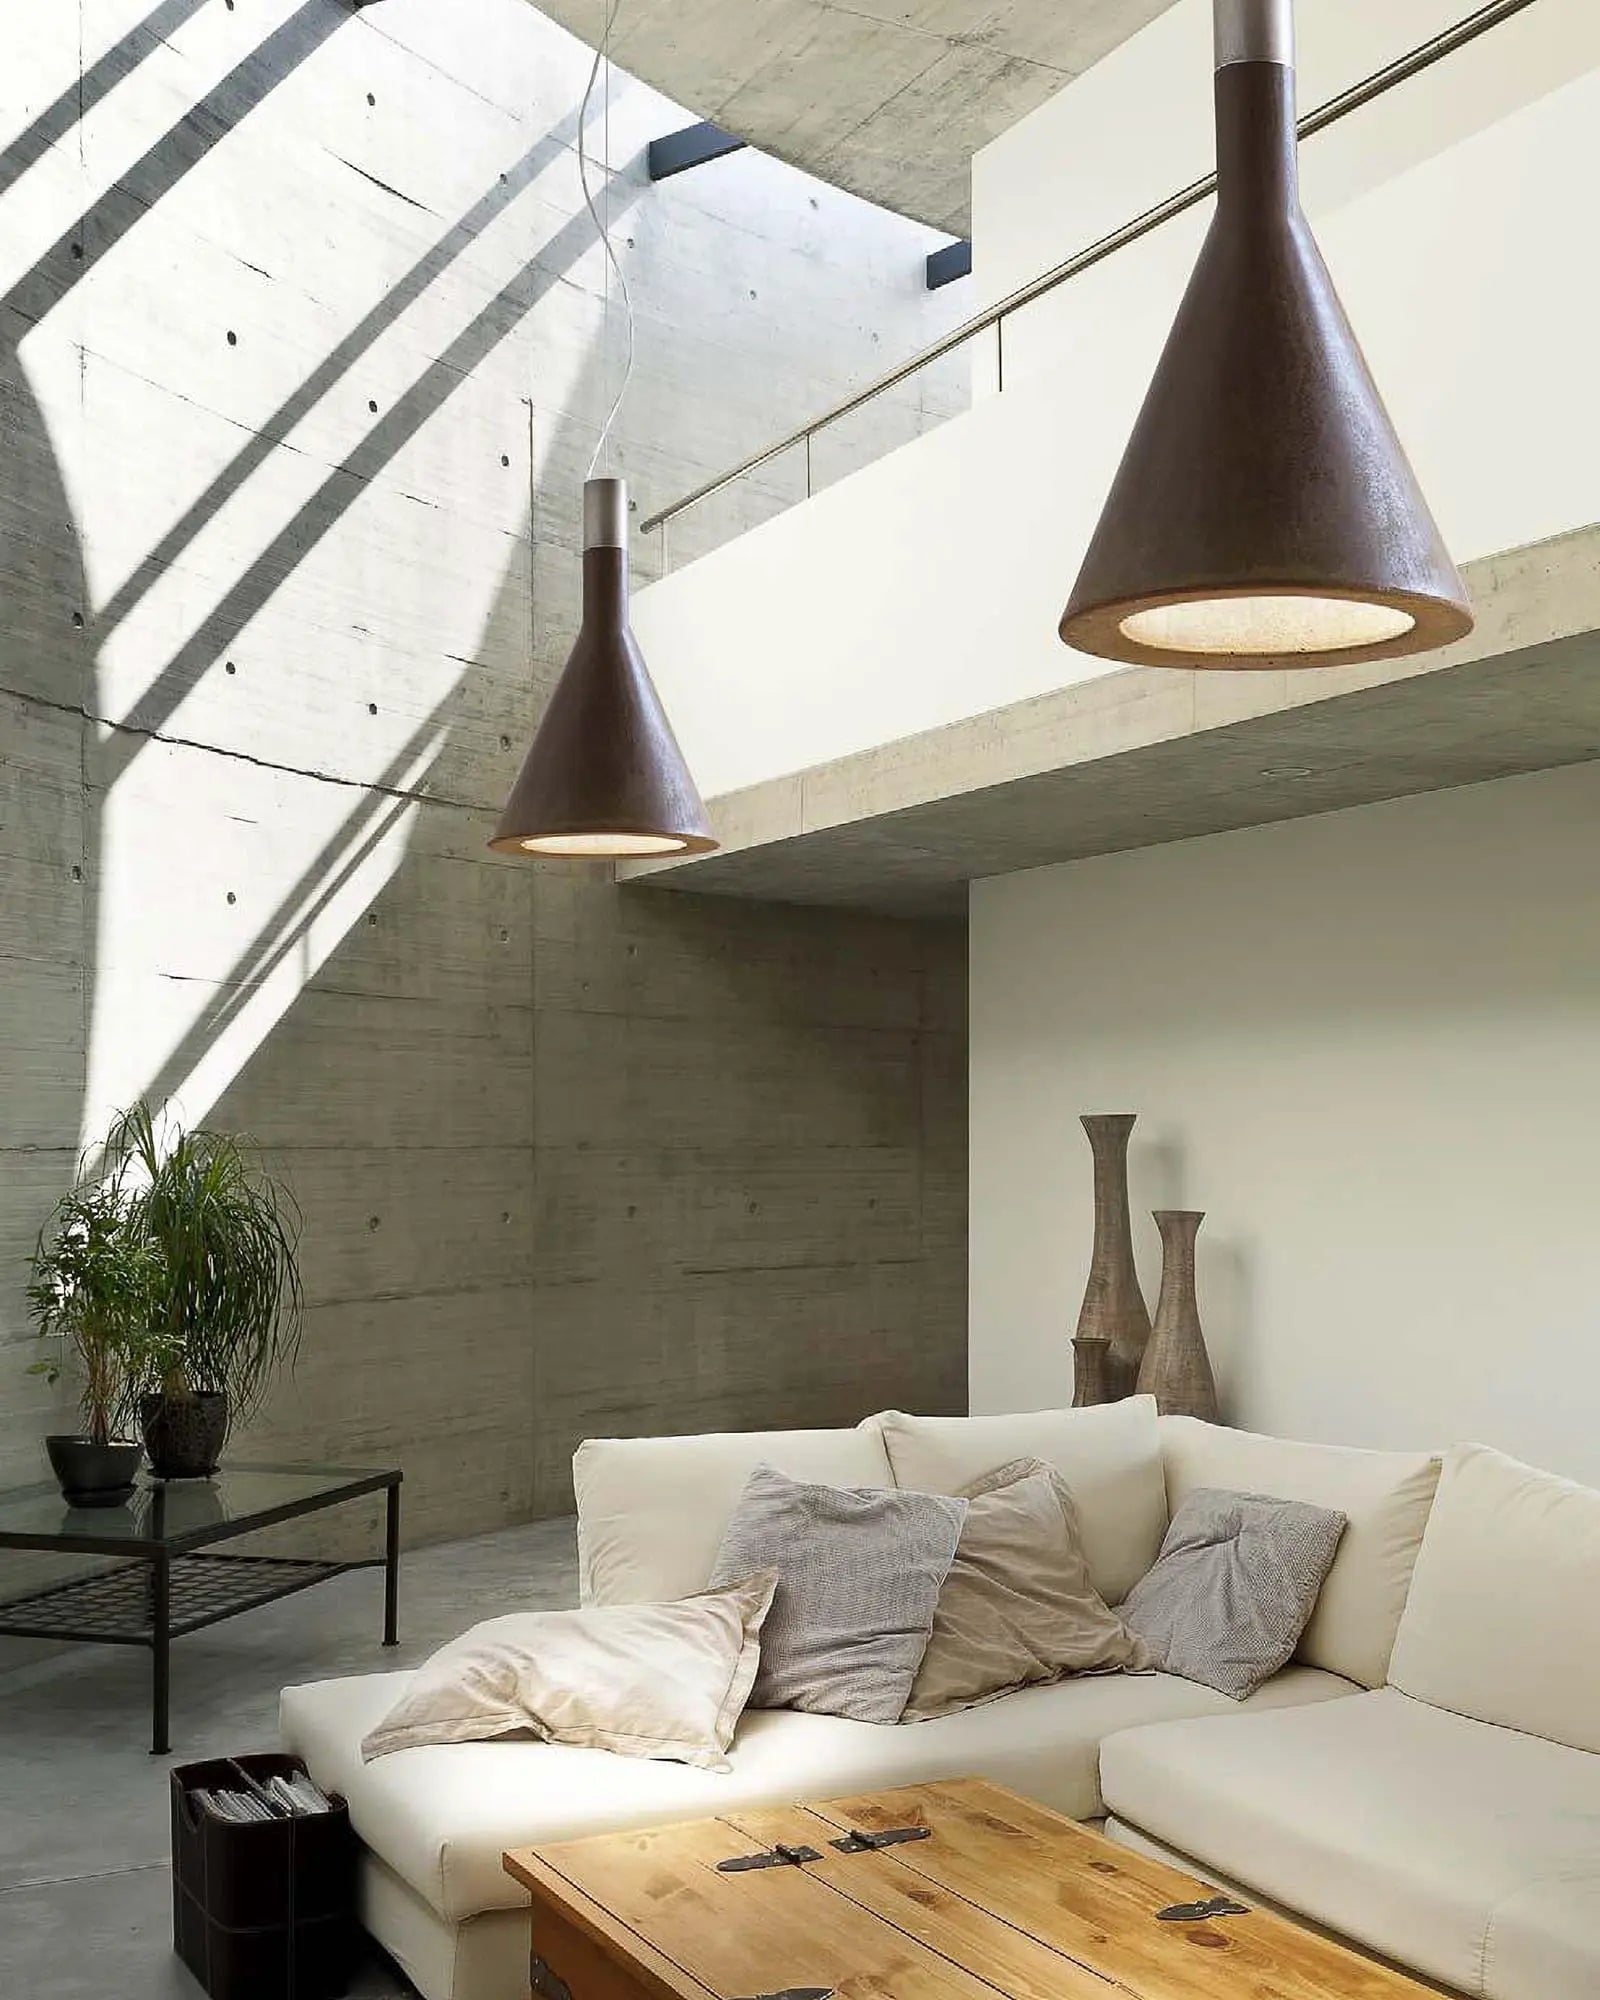 Funnel pendant light cluster above a living area